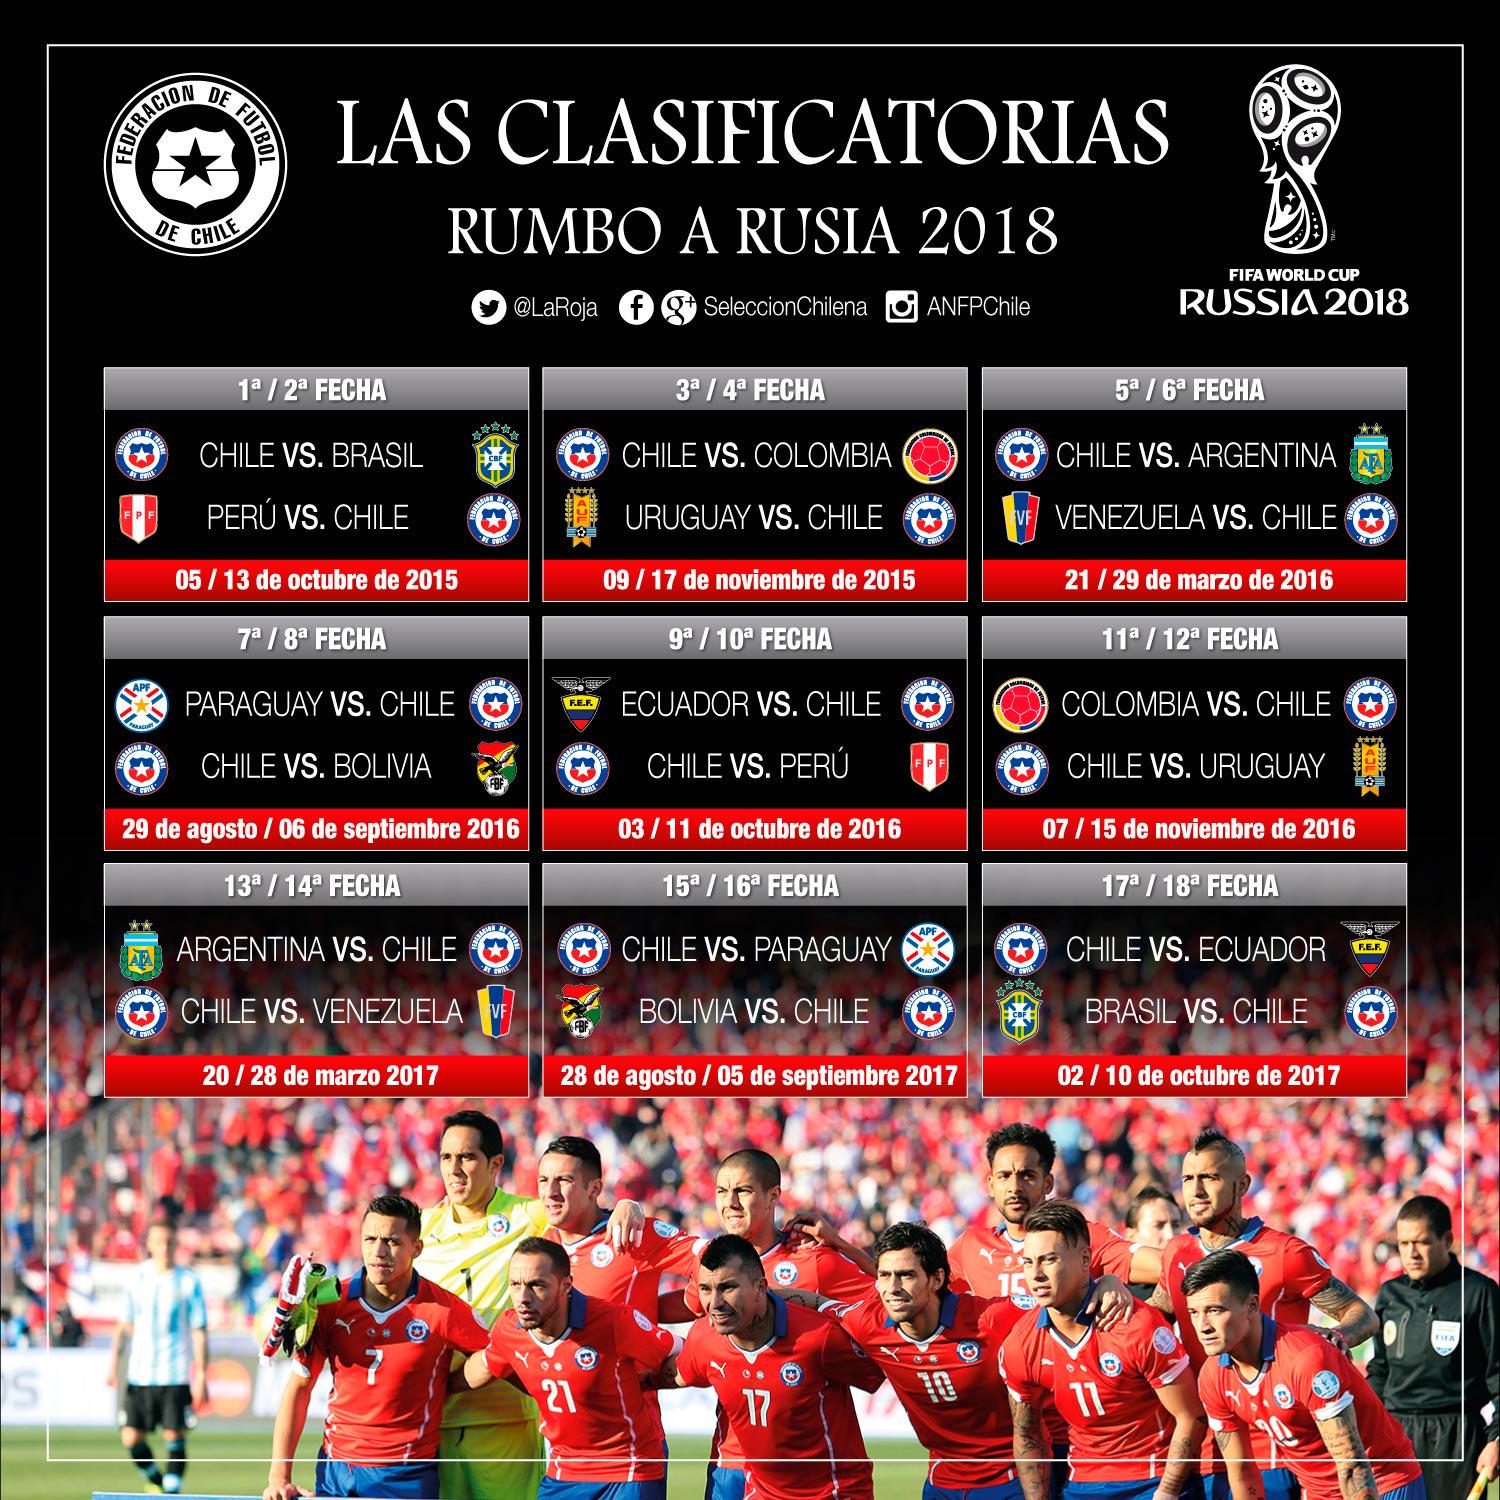 Seleccion Chilena On Twitter Asi Quedo El Fixture Completo De Las Clasificatorias Sudamericanas Para Rusia2018 Http T Co Qg7igxcw4k